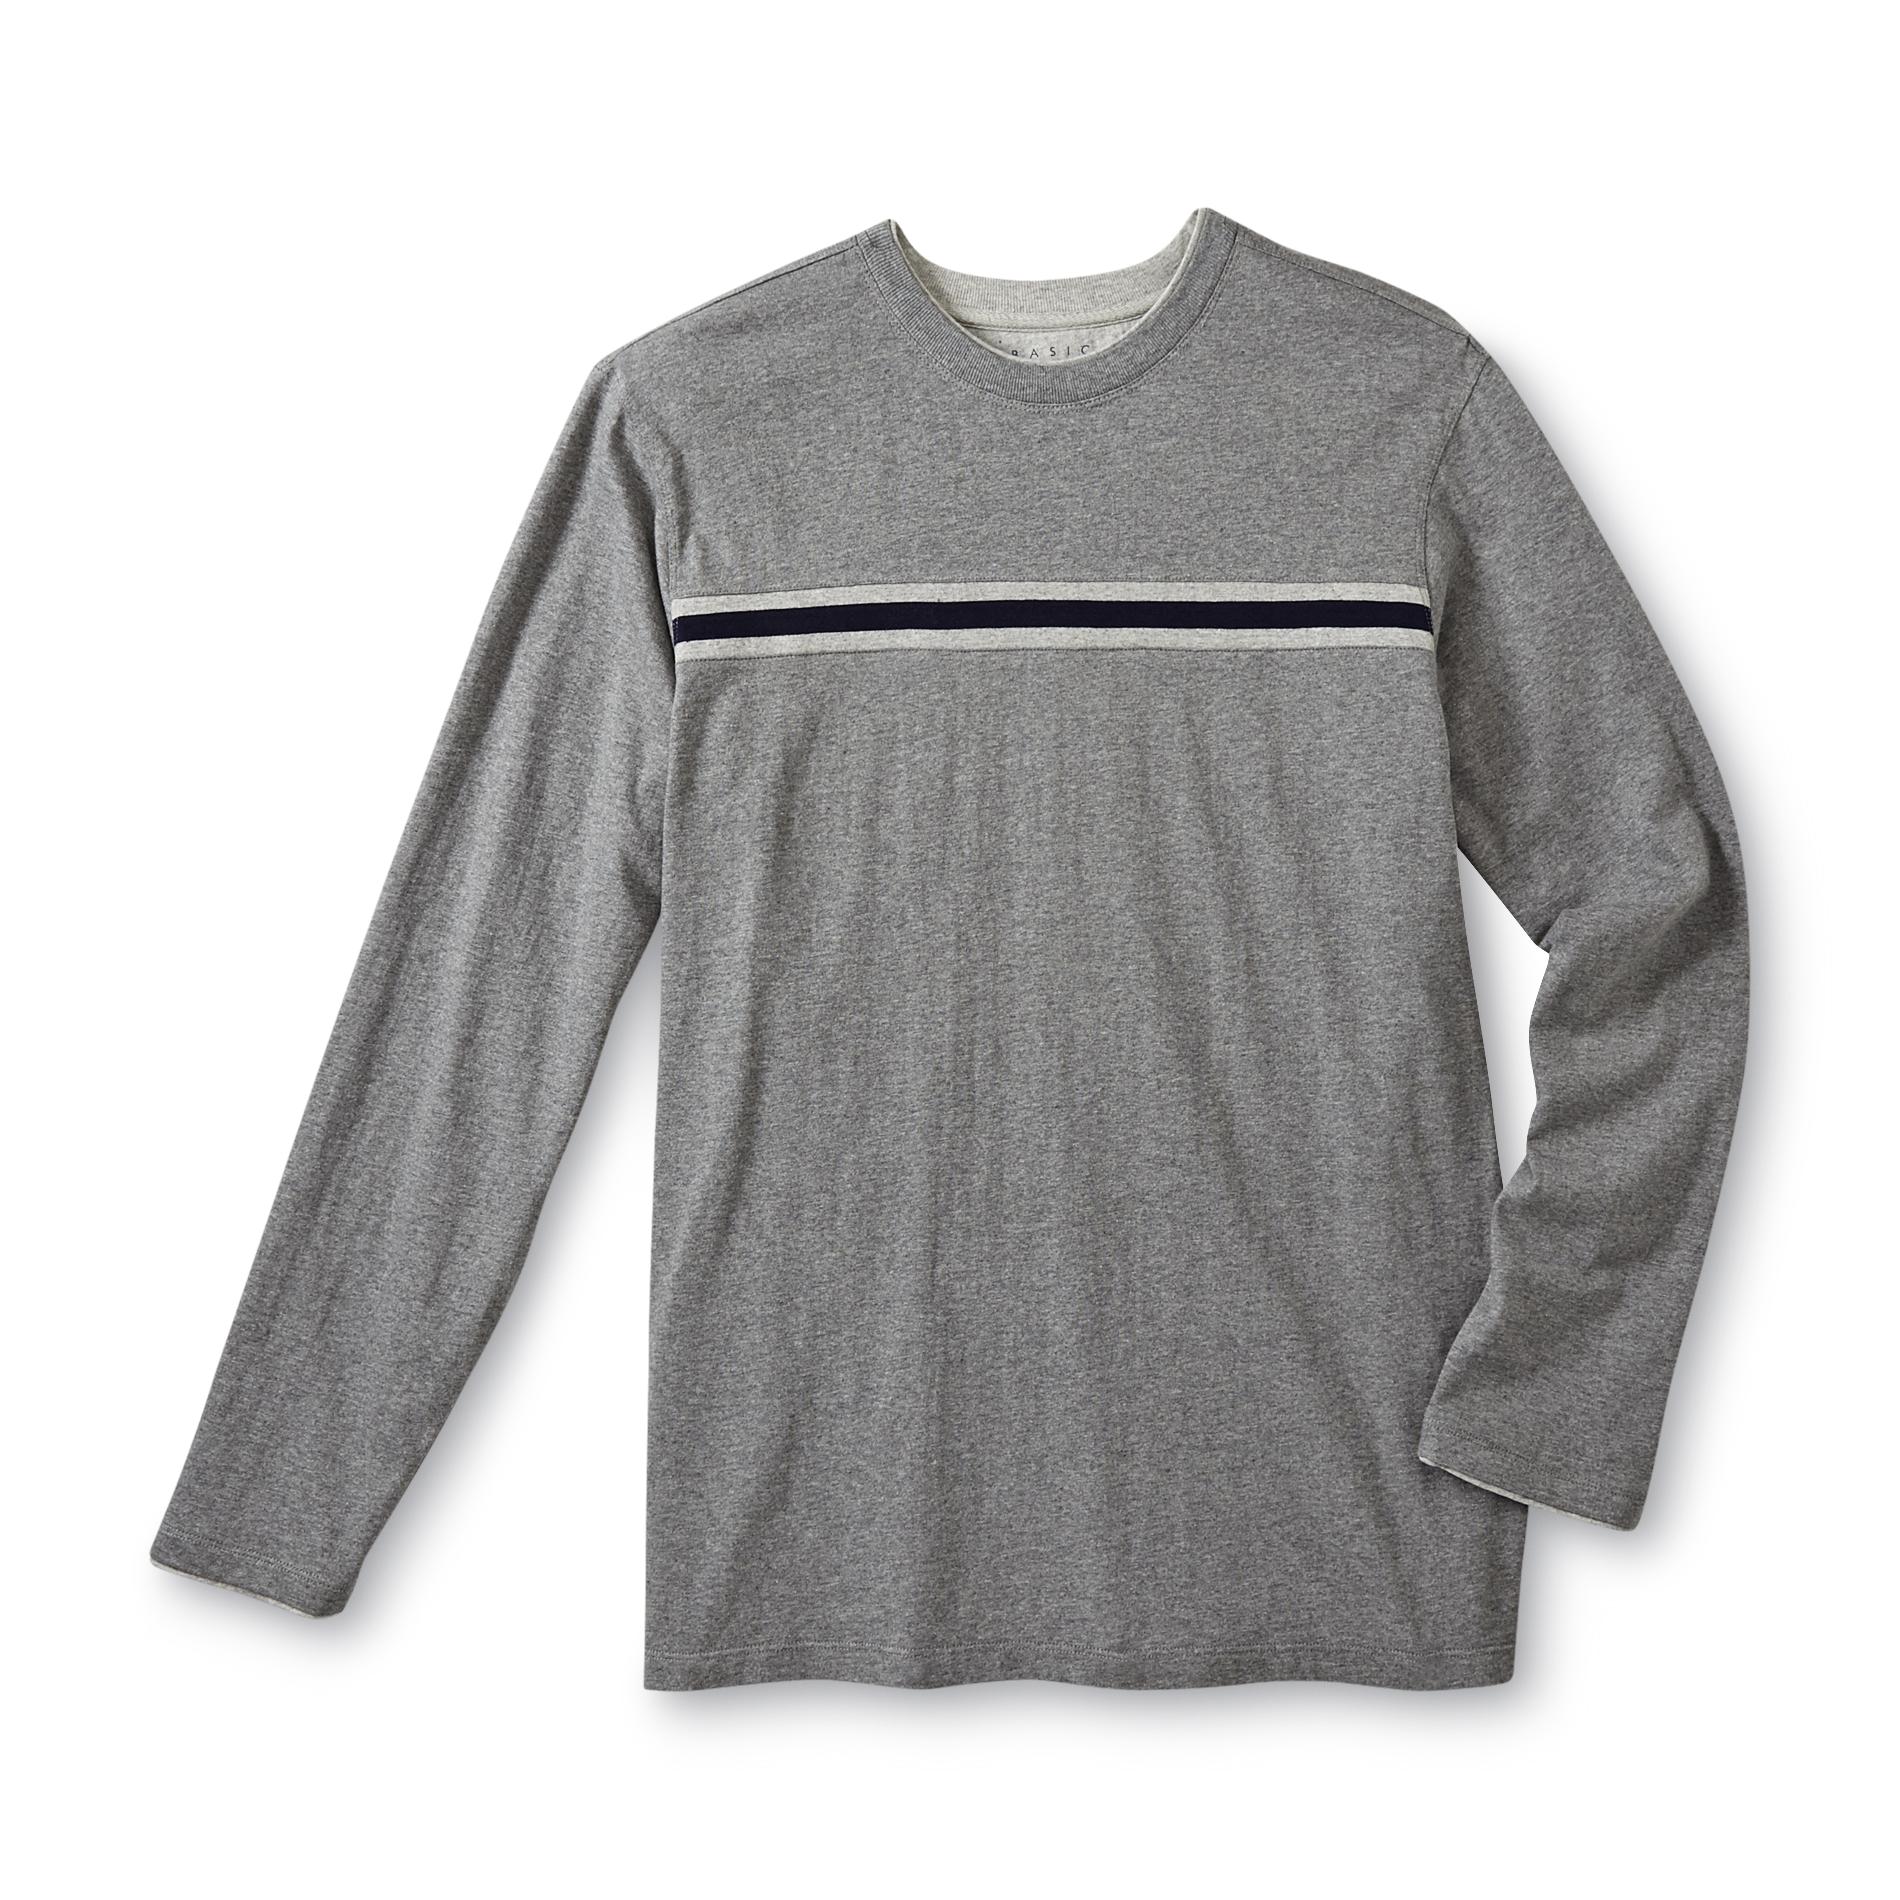 Basic Editions Men's Big & Tall Layered Look Long-Sleeve T-Shirt - Stripe